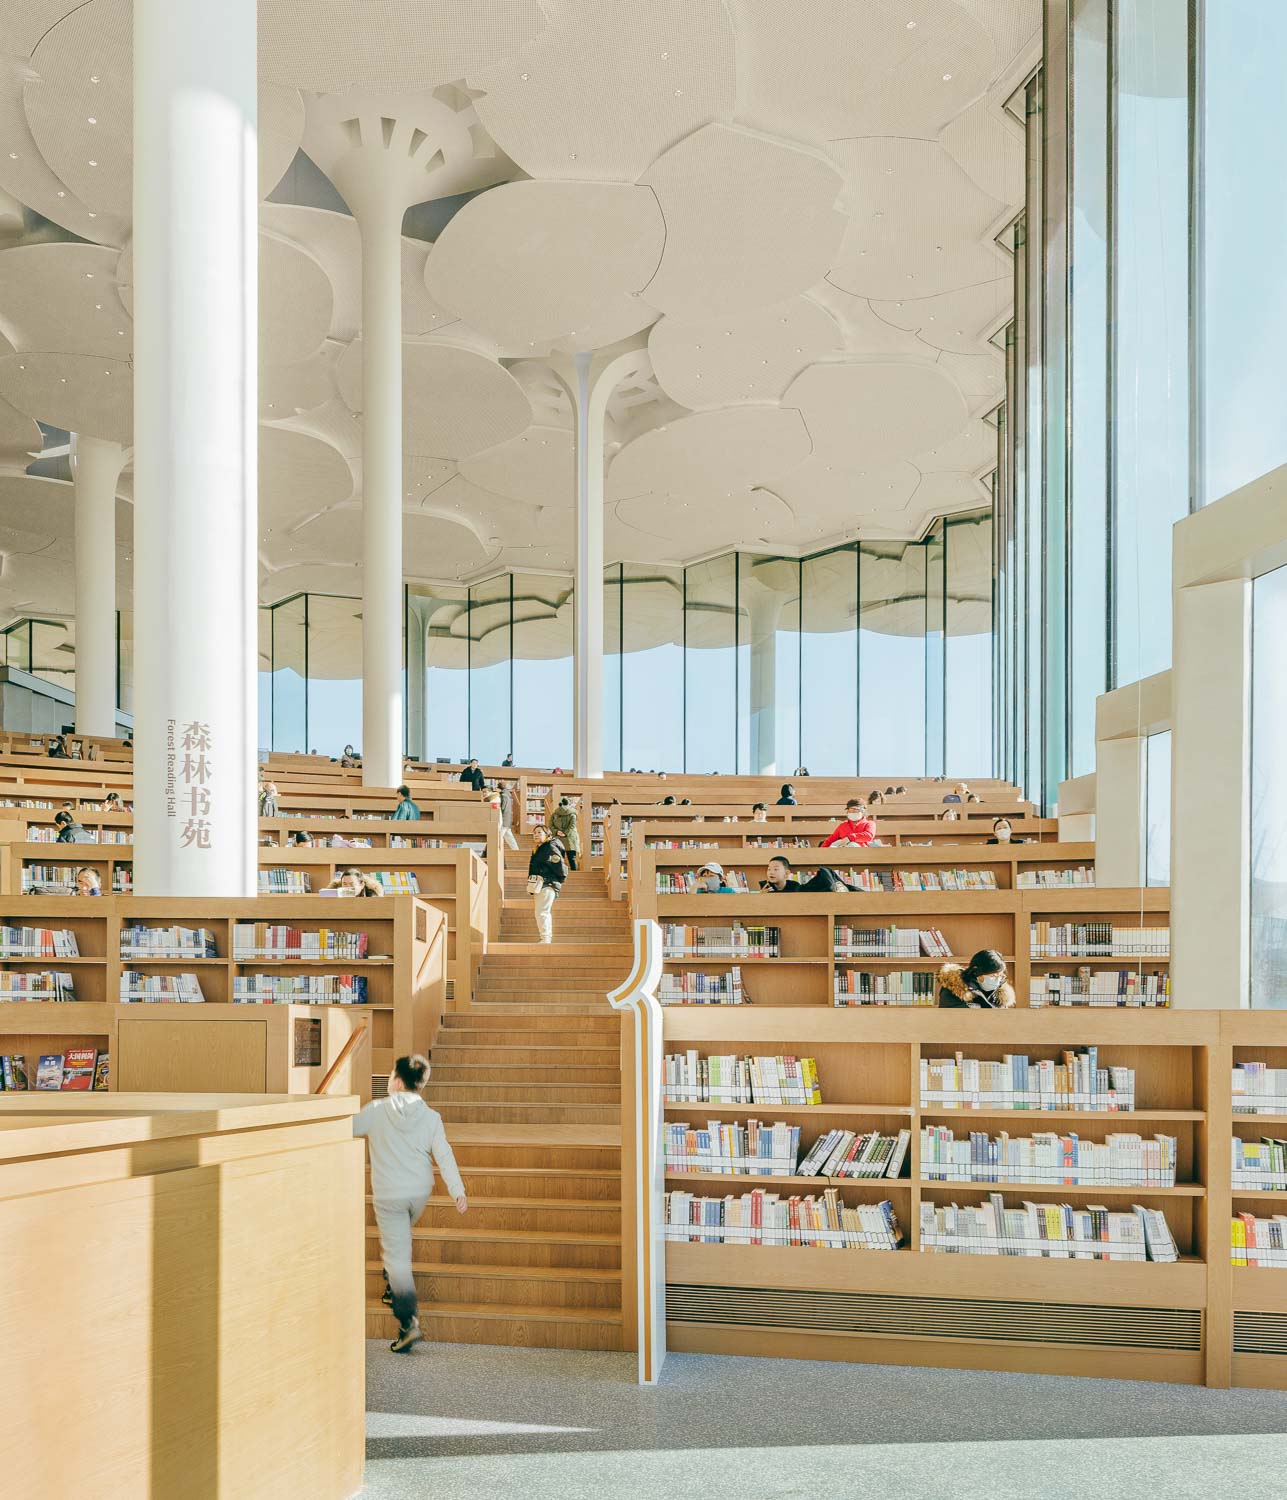 Beijing City Library by Snøhetta